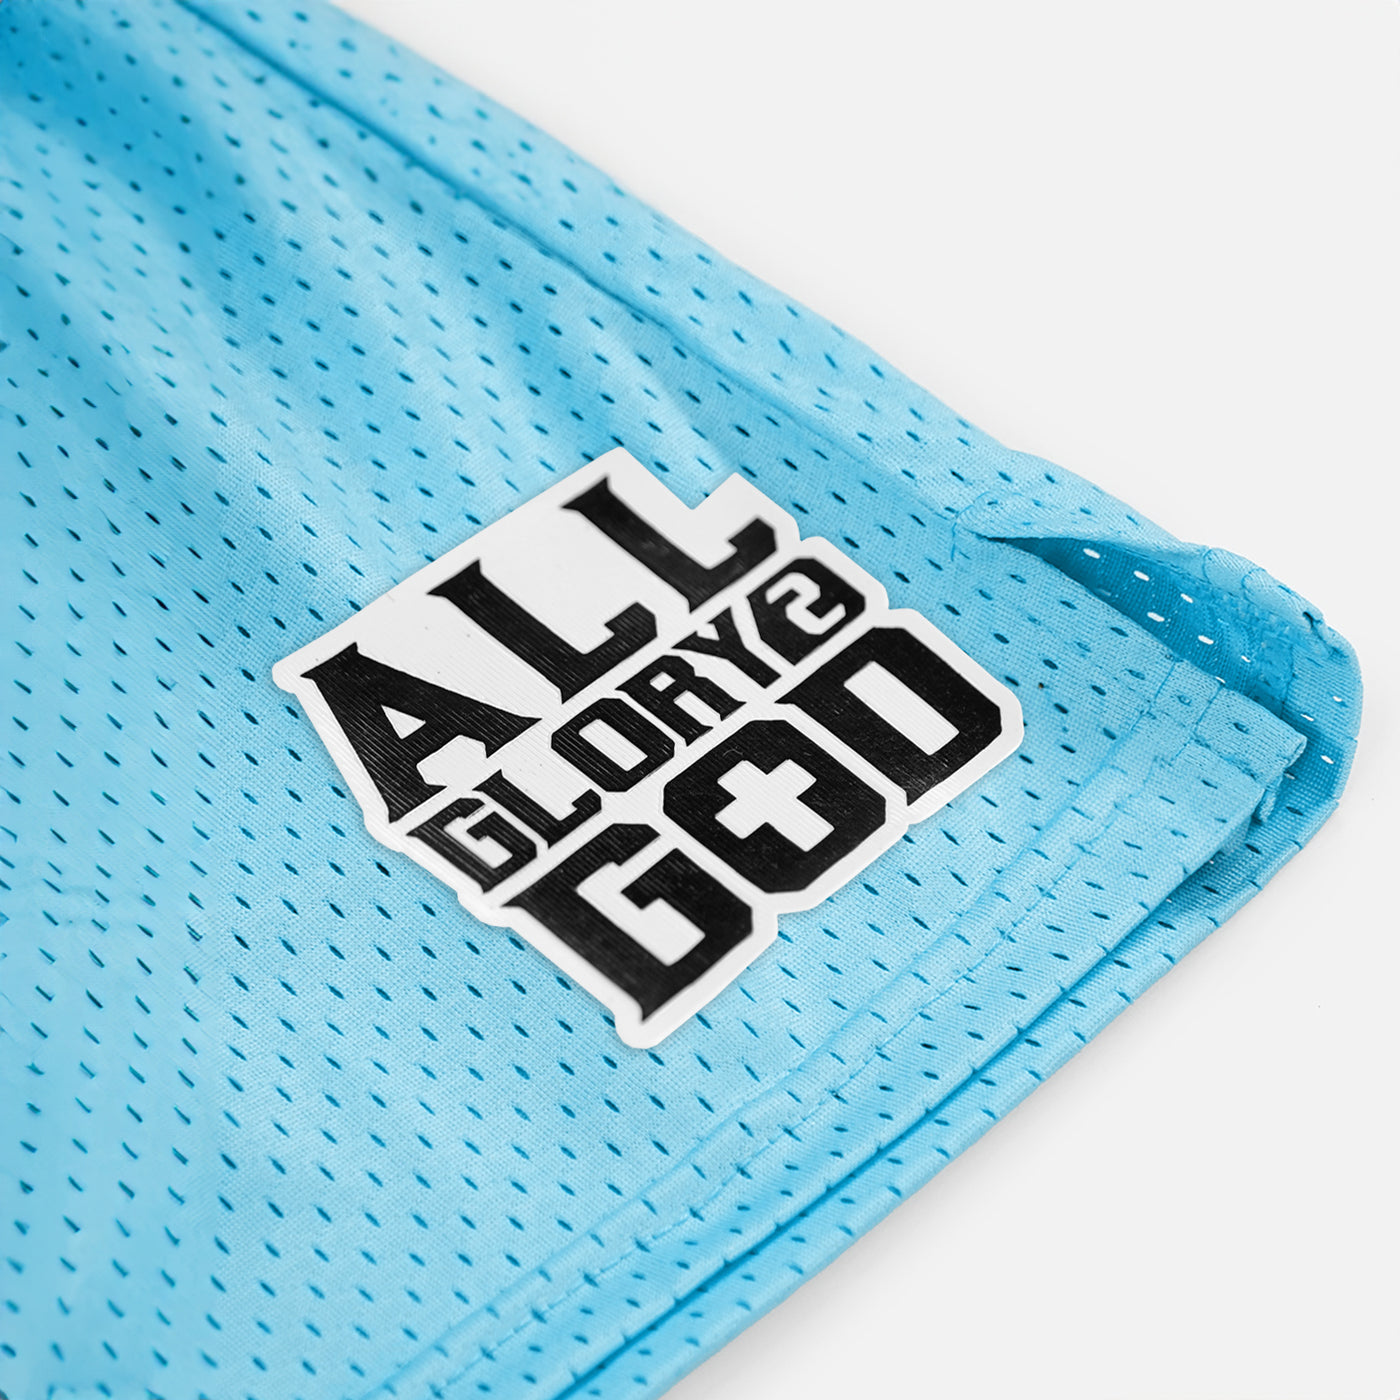 All Glory 2 God Patch Shorts - 7"